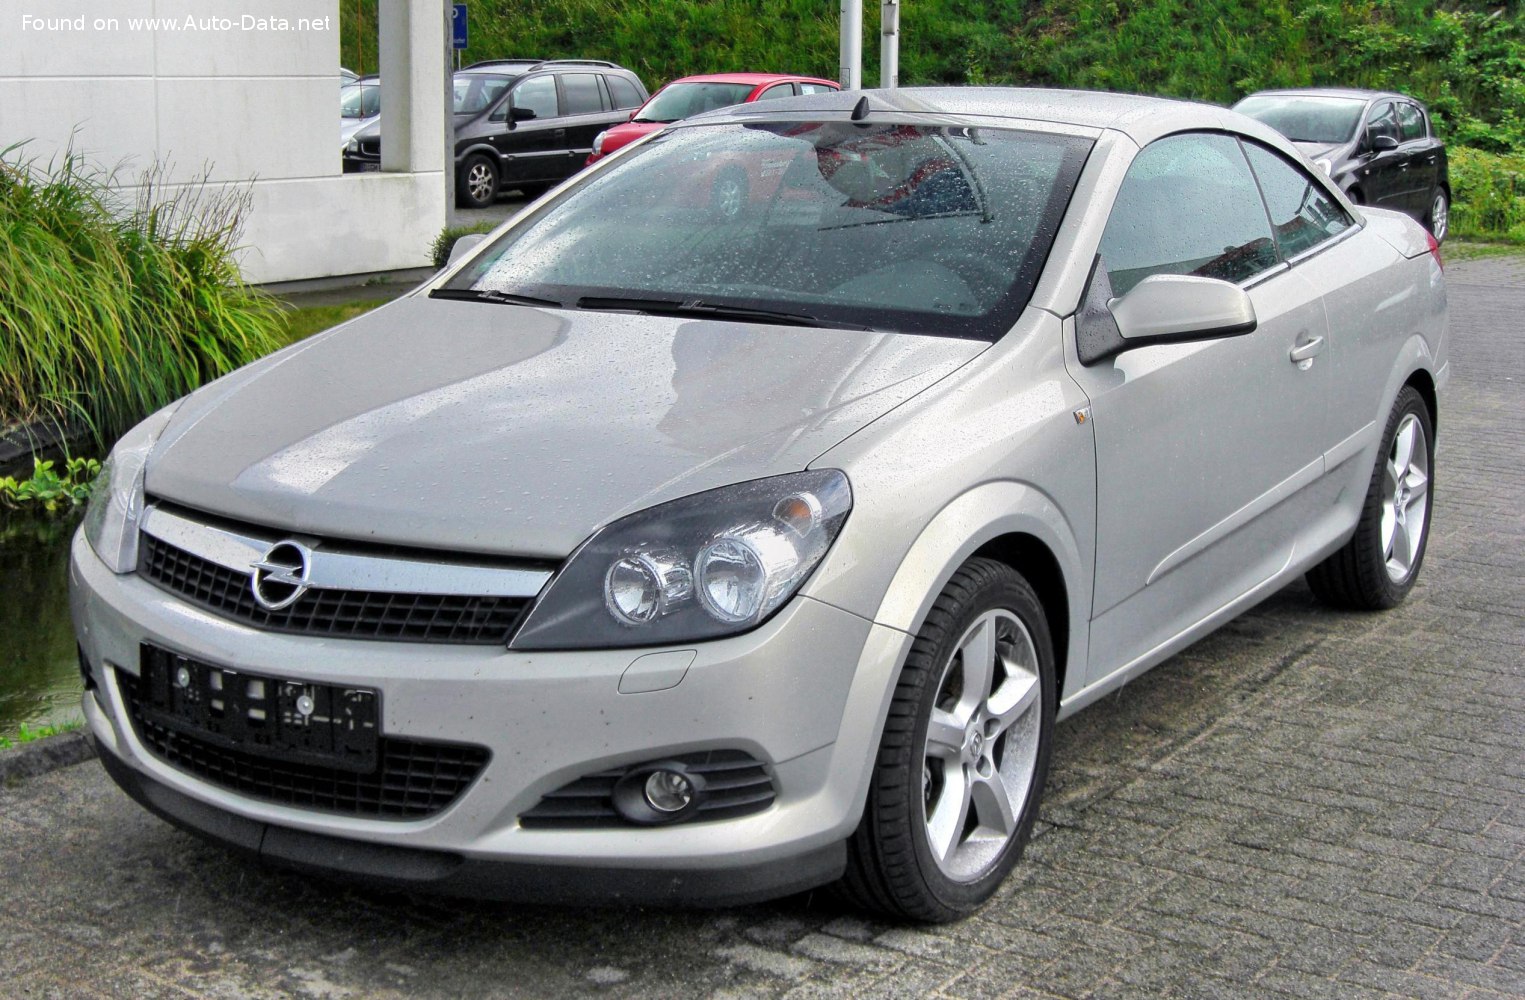 https://www.auto-data.net/images/f119/Opel-Astra-H-TwinTop.jpg